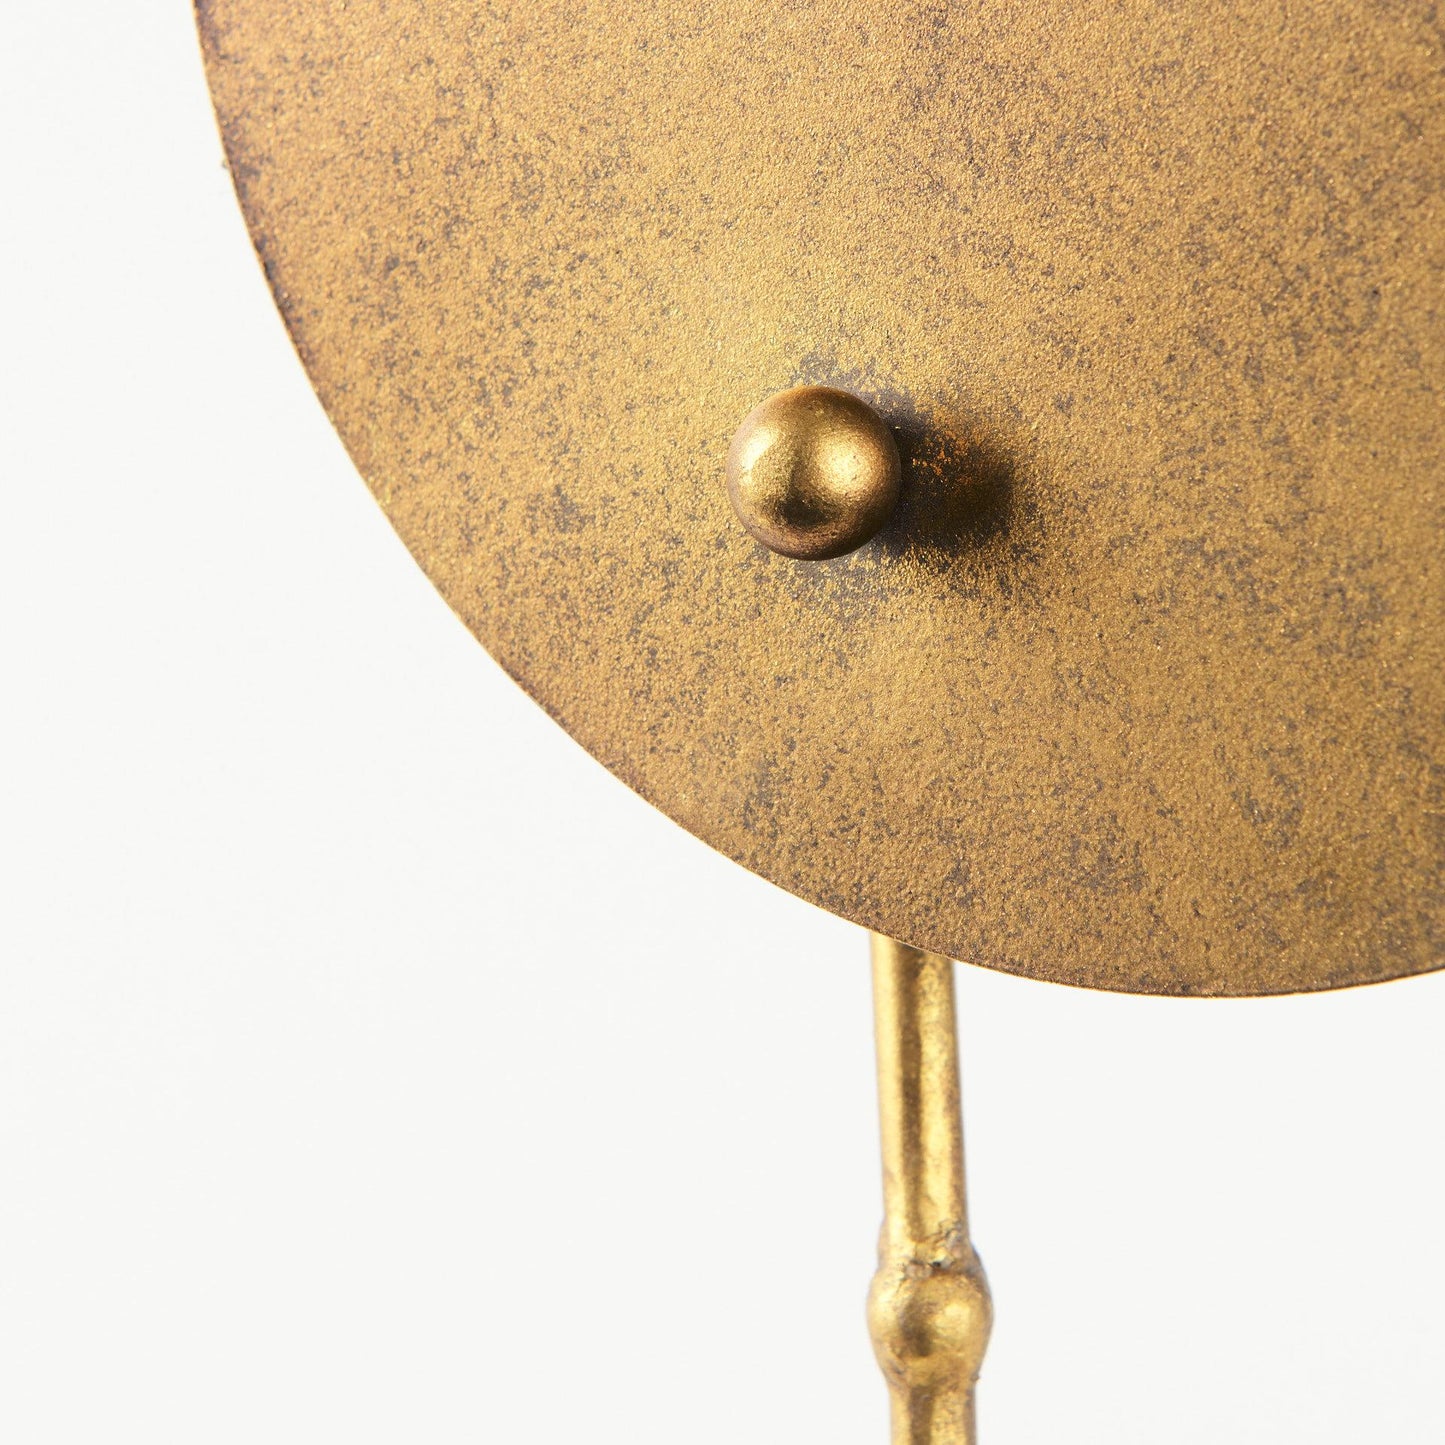 Chadwick Antiqued Brass Duck Leg Table Clock